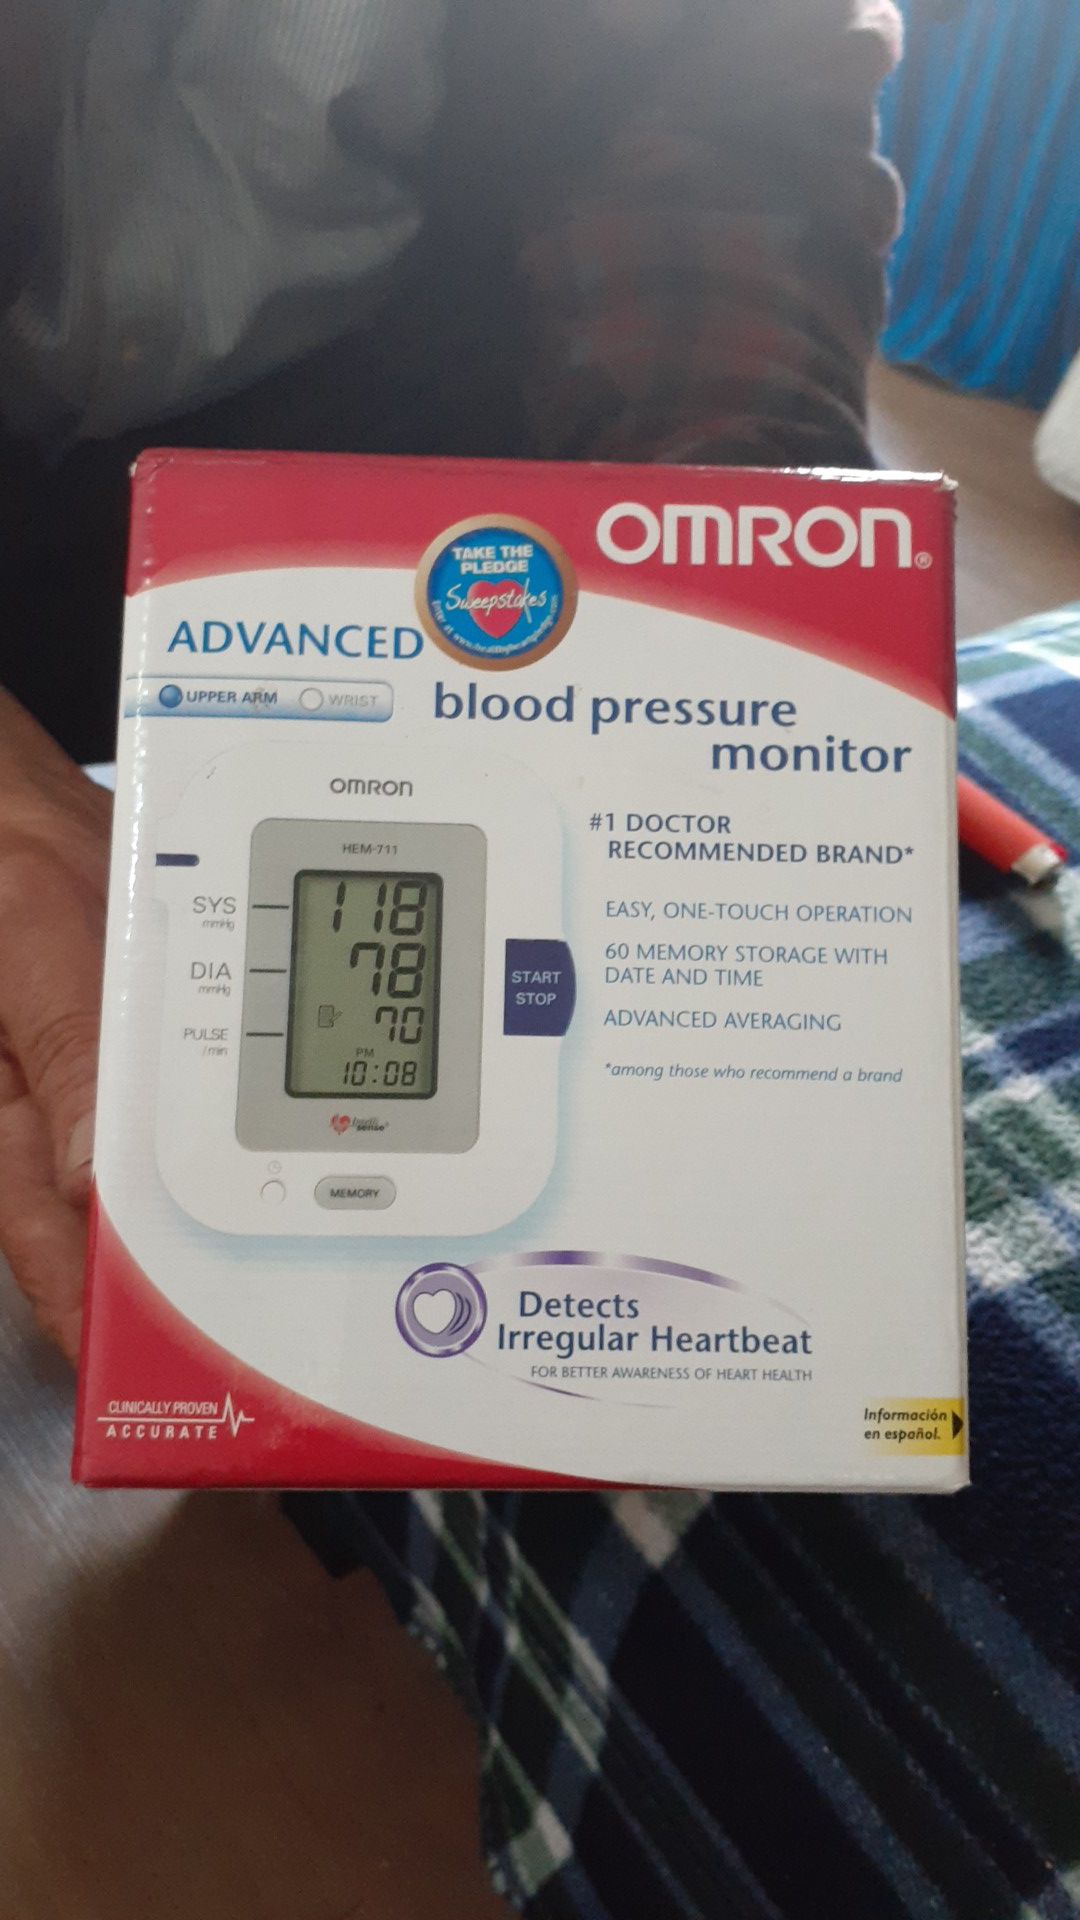 Advance Blood pressure monitor detects irregular heartbeat(Omron)